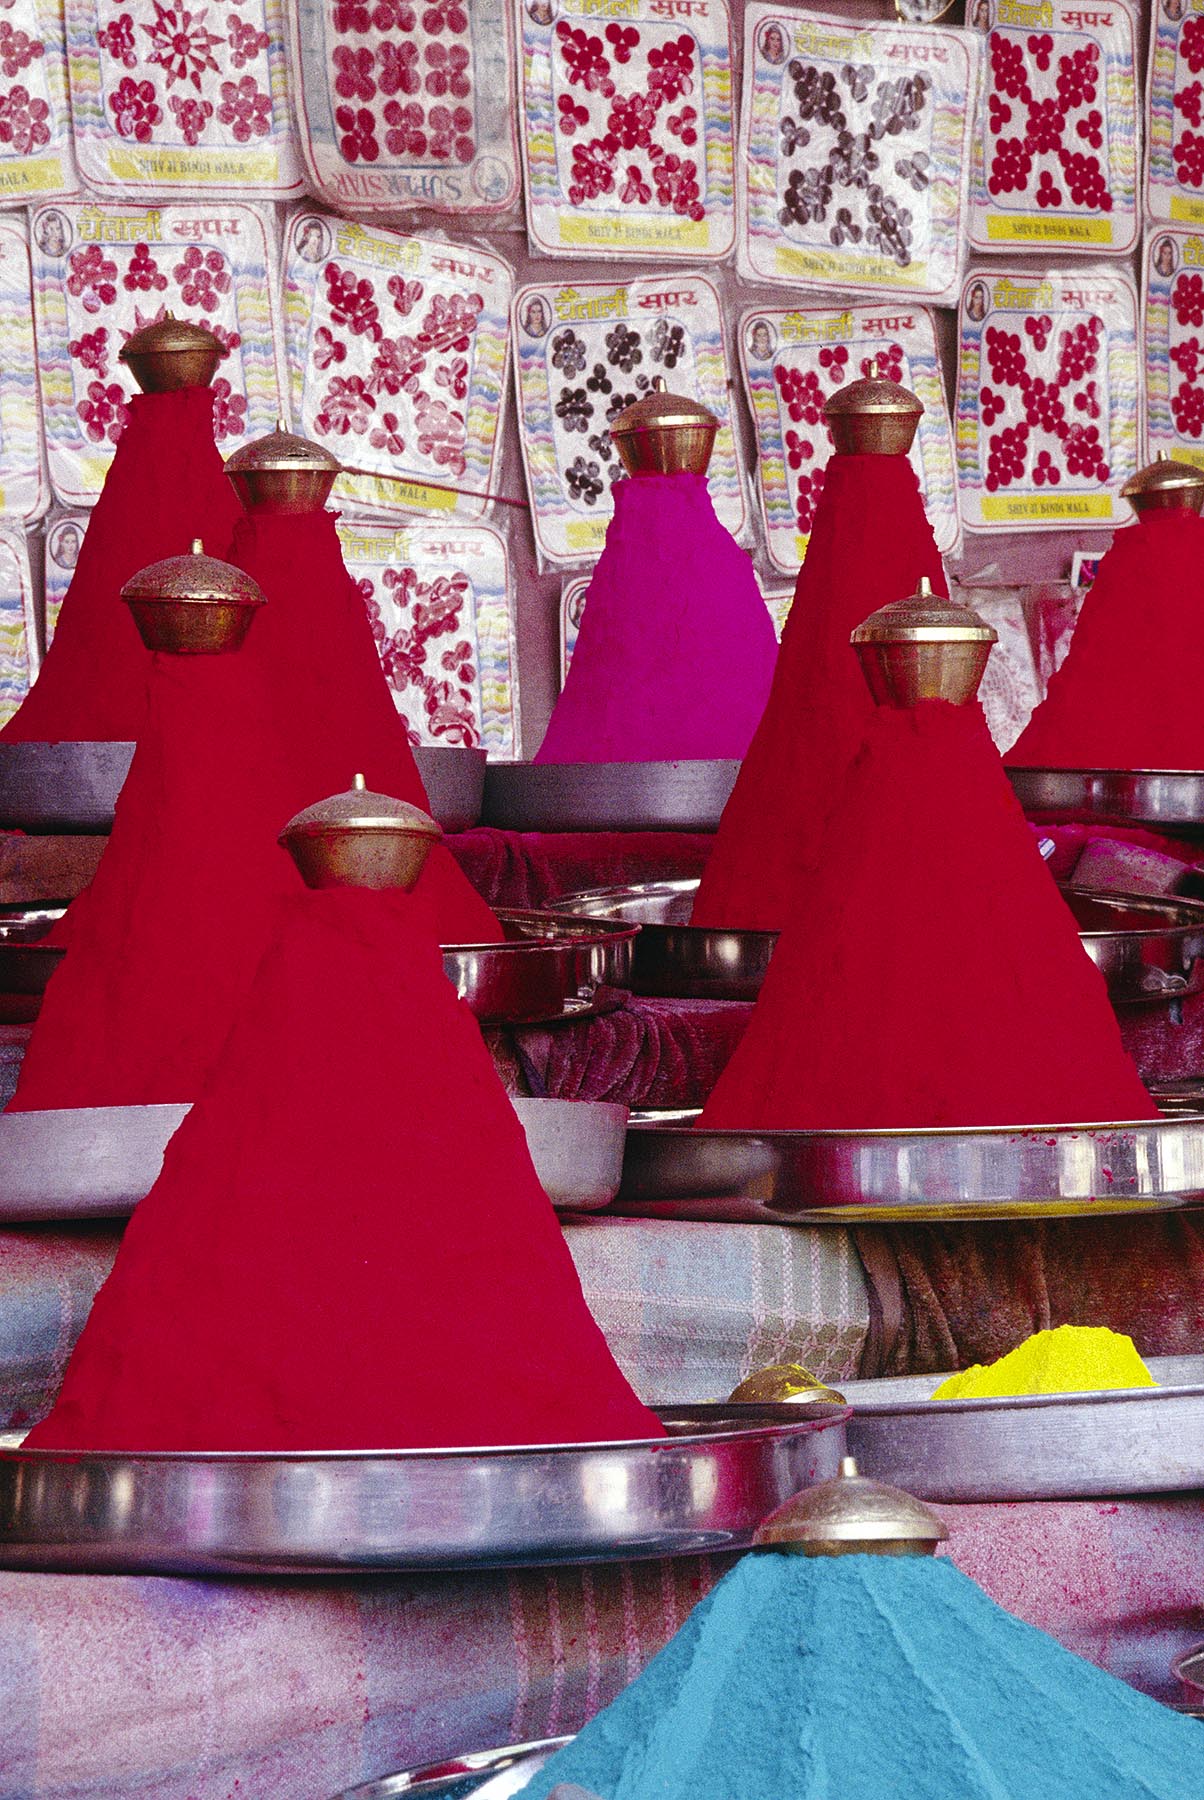 Piles of red TIKKA (BLESSING) POWDER in a market stall at the PUSHKAR CAMEL FAIR - RAJASTHAN, INDIA